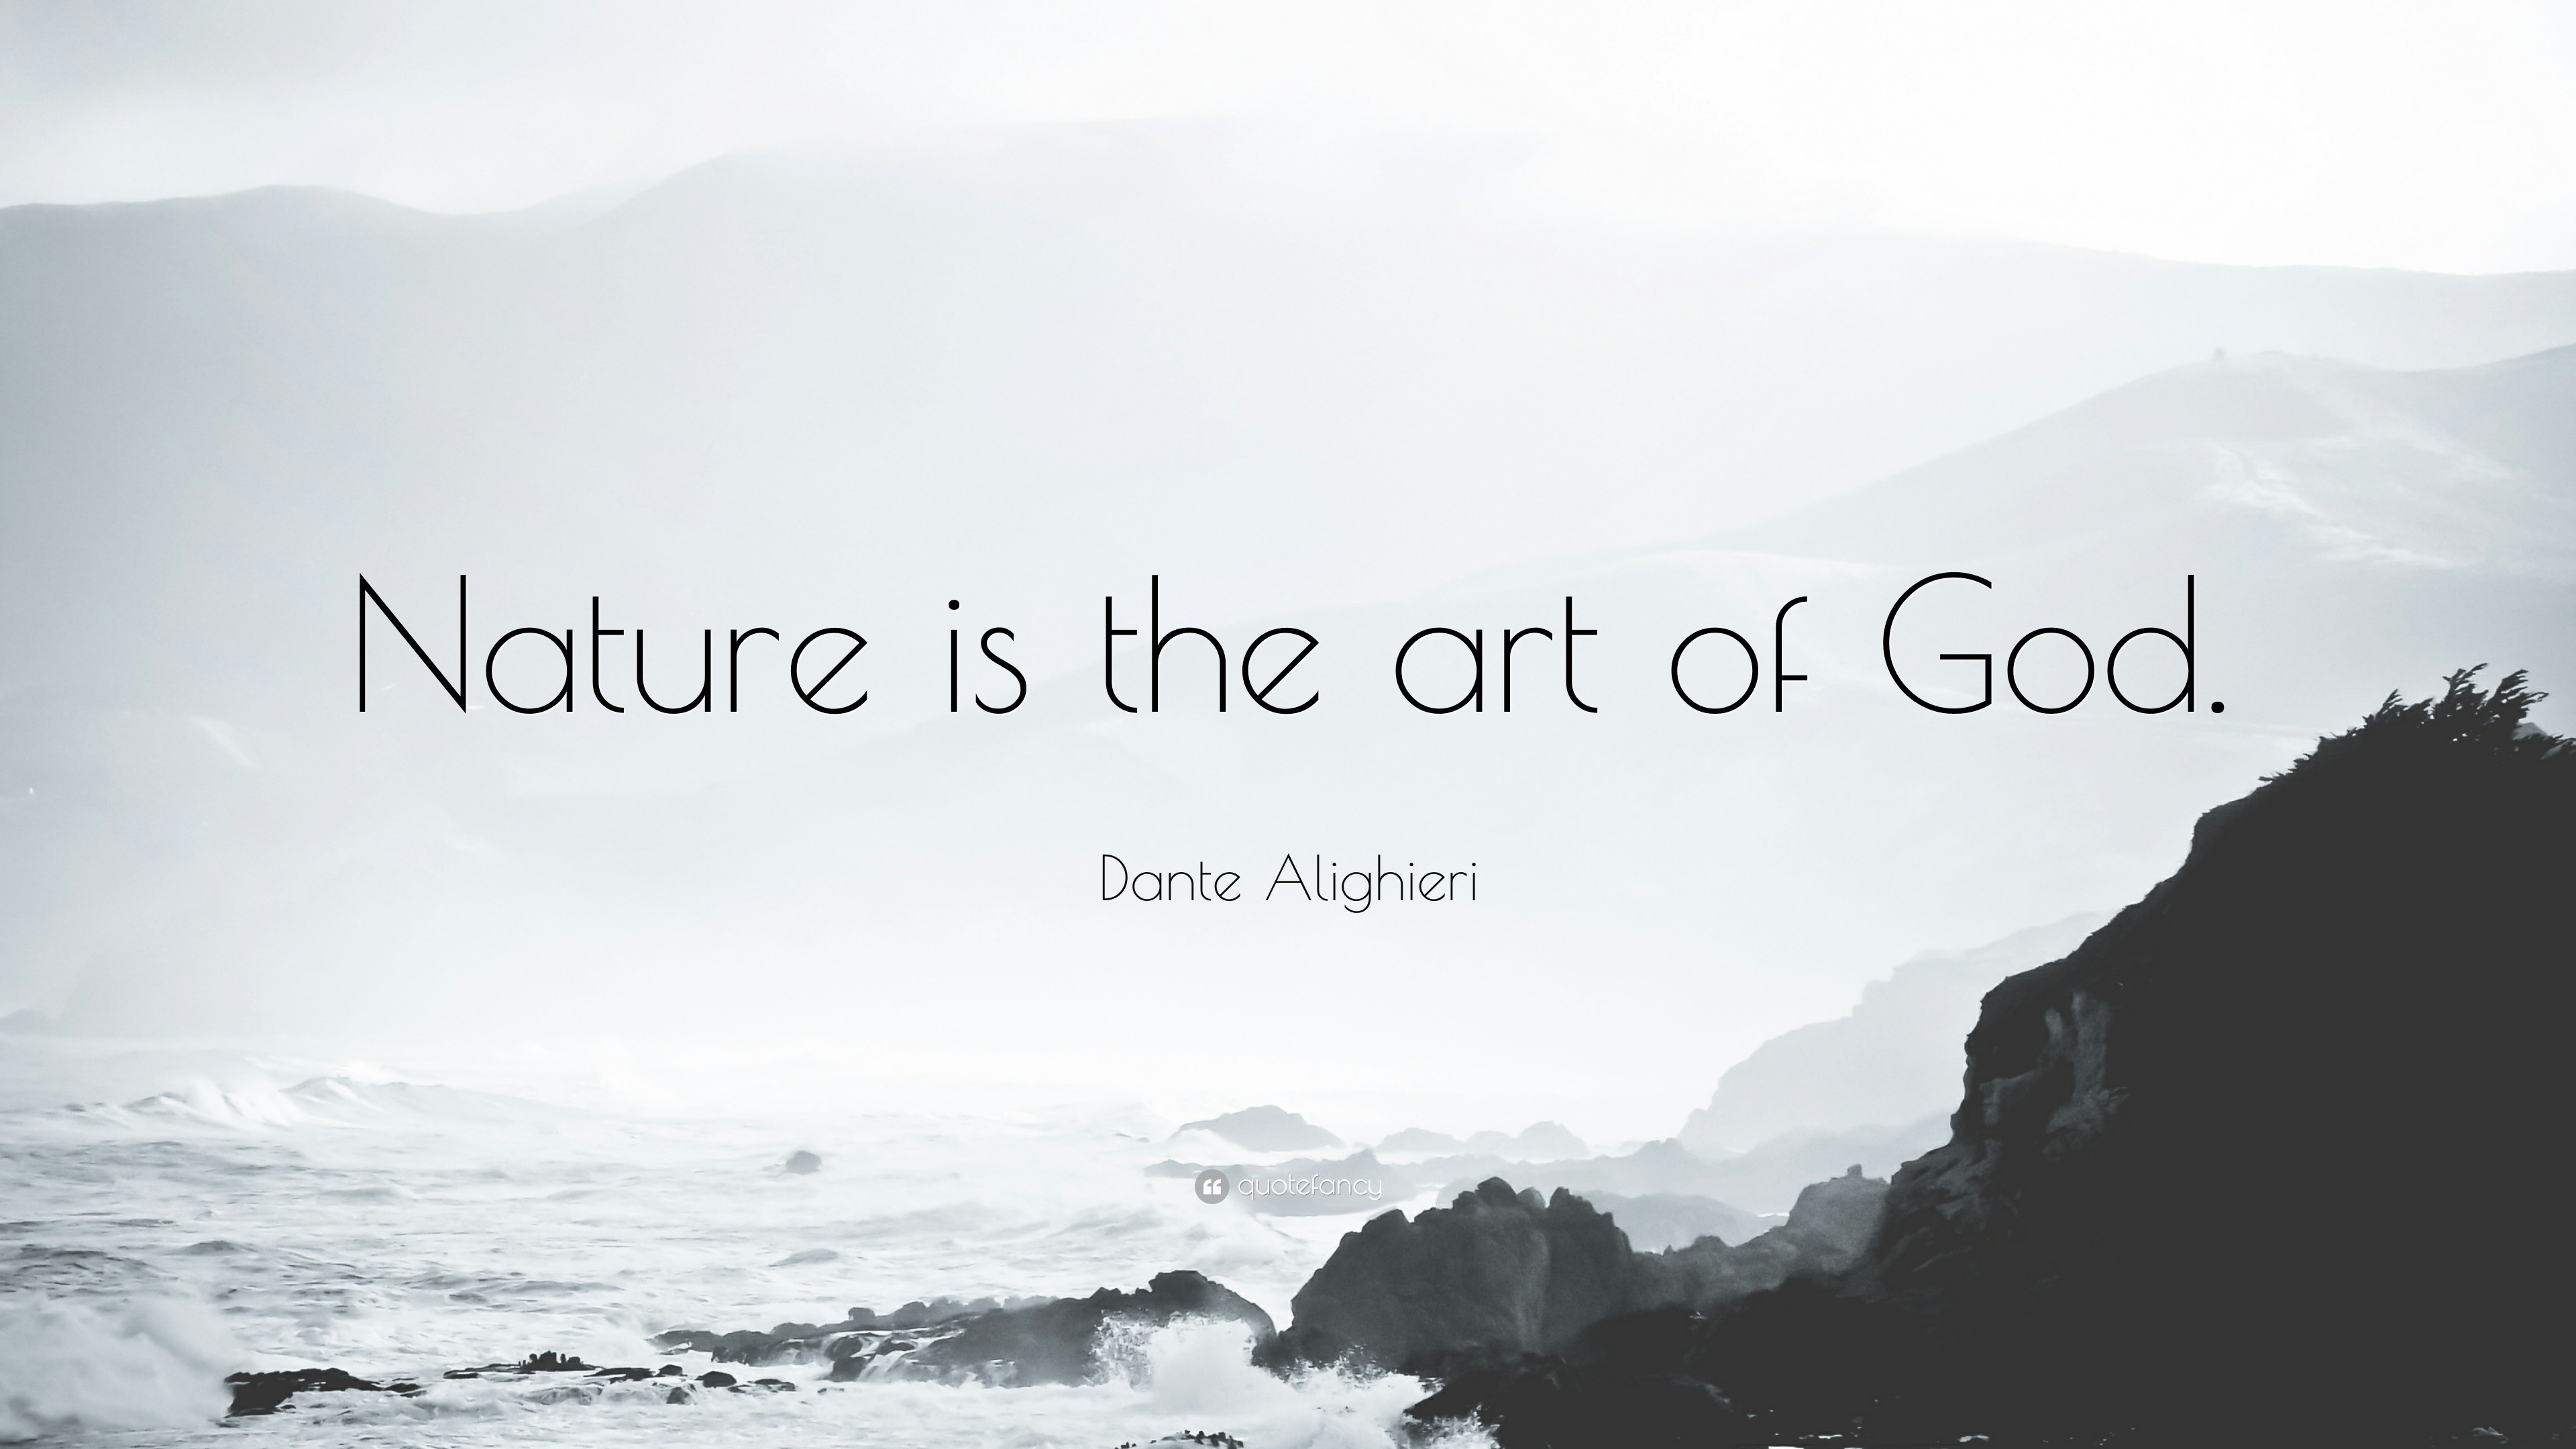 Dante Alighieri Quote: “Nature is the art of God.” (25 wallpapers